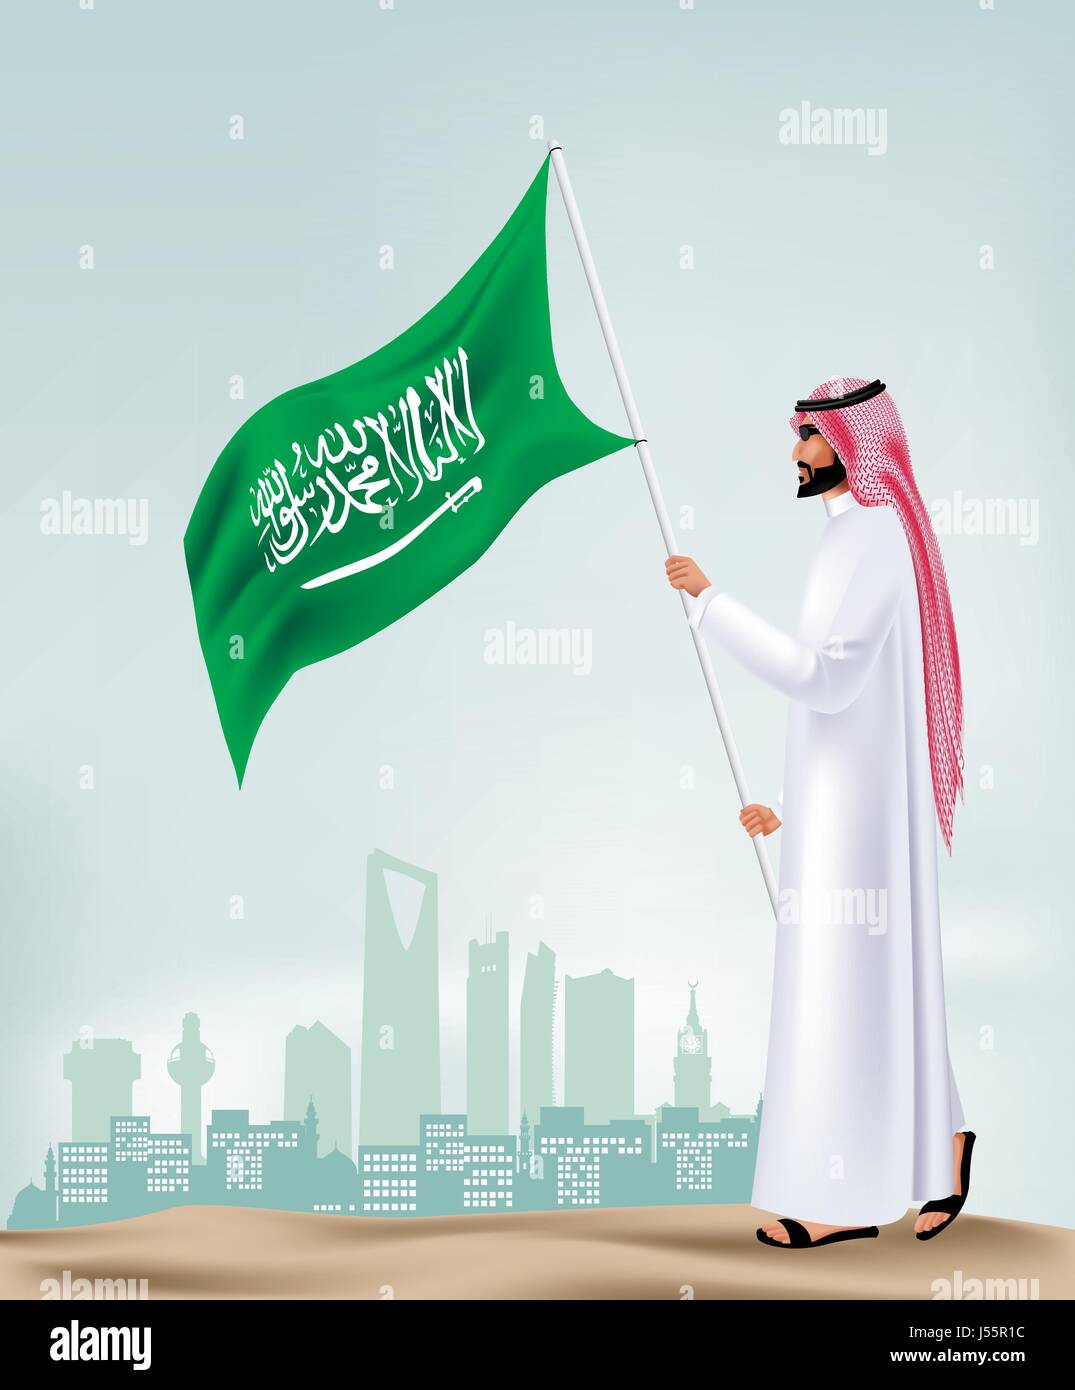 Download Saudi Arabia Man Holding Flag in the City. Editable Vector ...